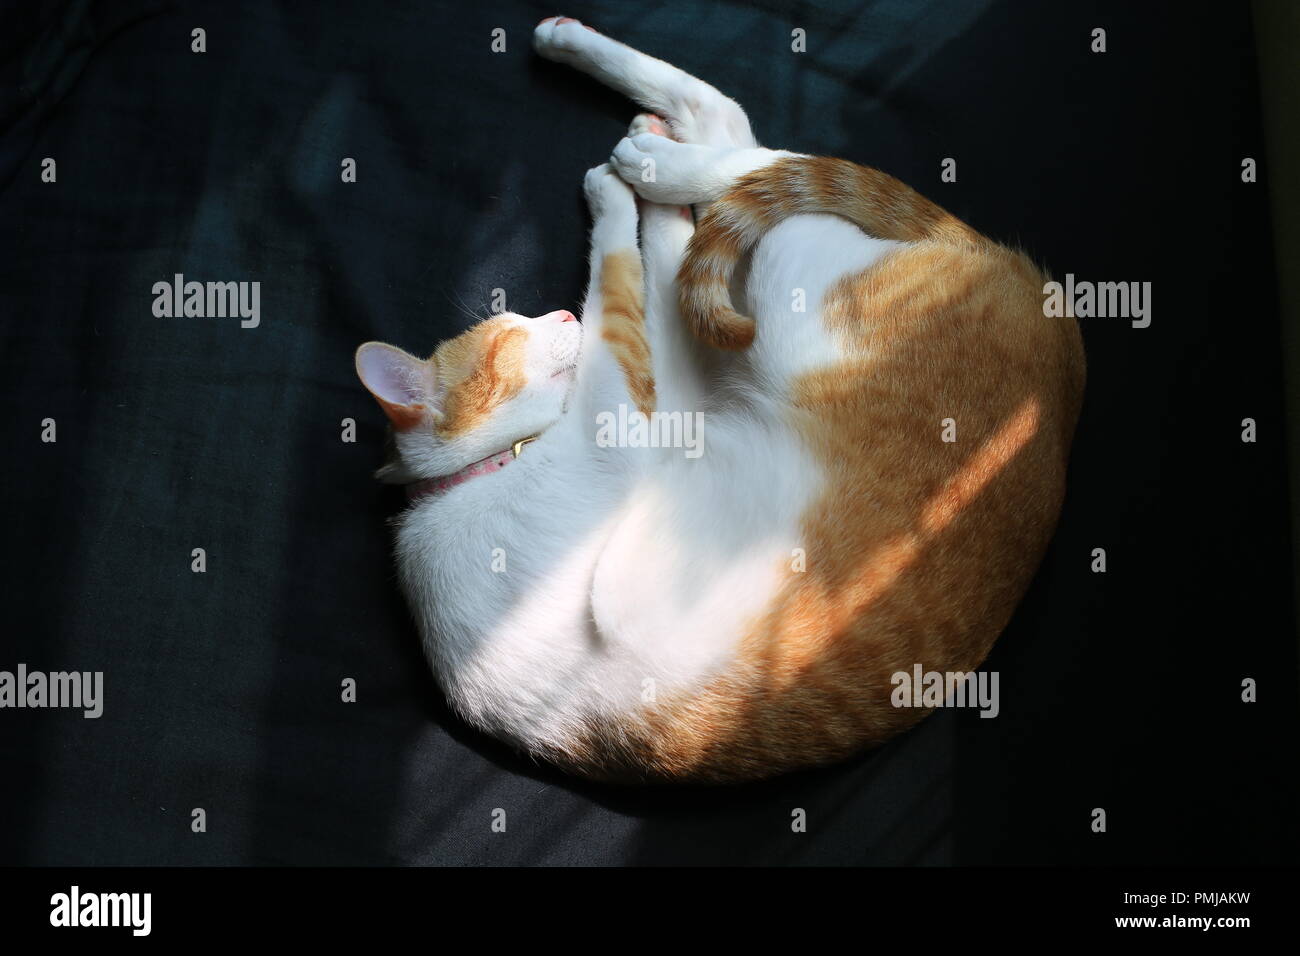 ginger cat sleep like a ball Stock Photo